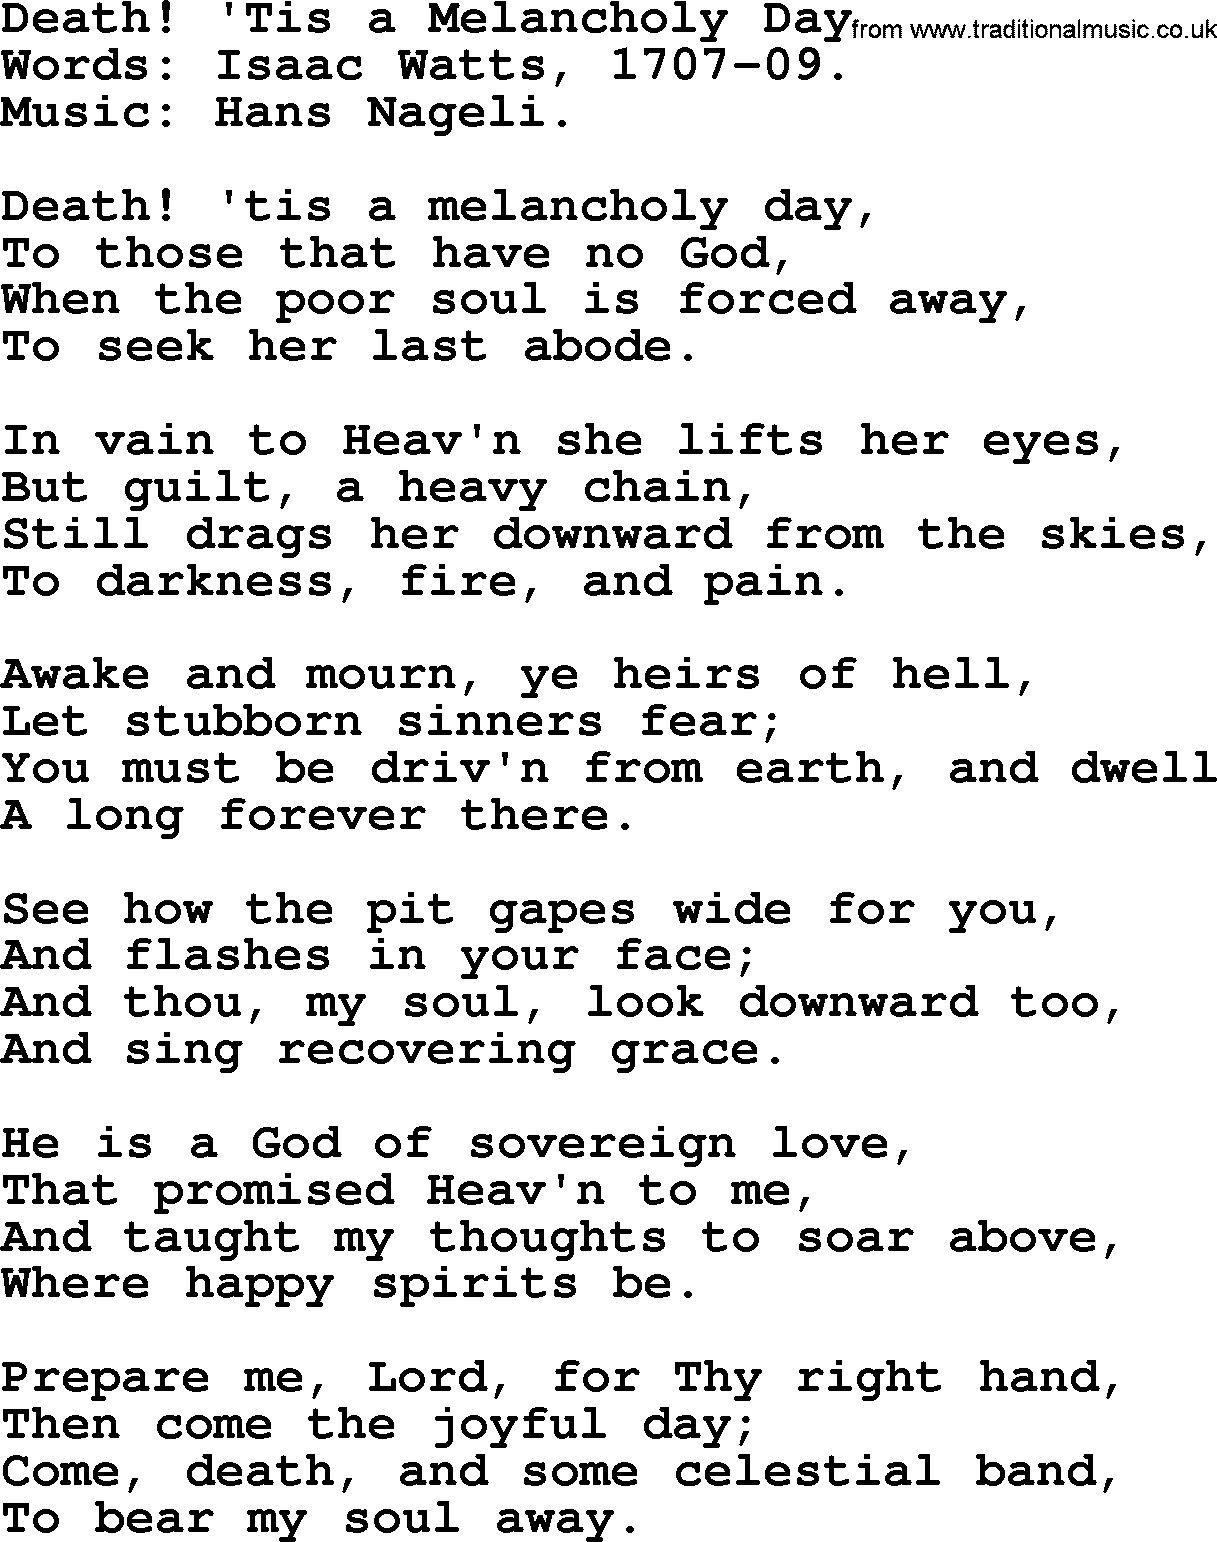 Isaac Watts Christian hymn: Death! 'Tis a Melancholy Day- lyricss